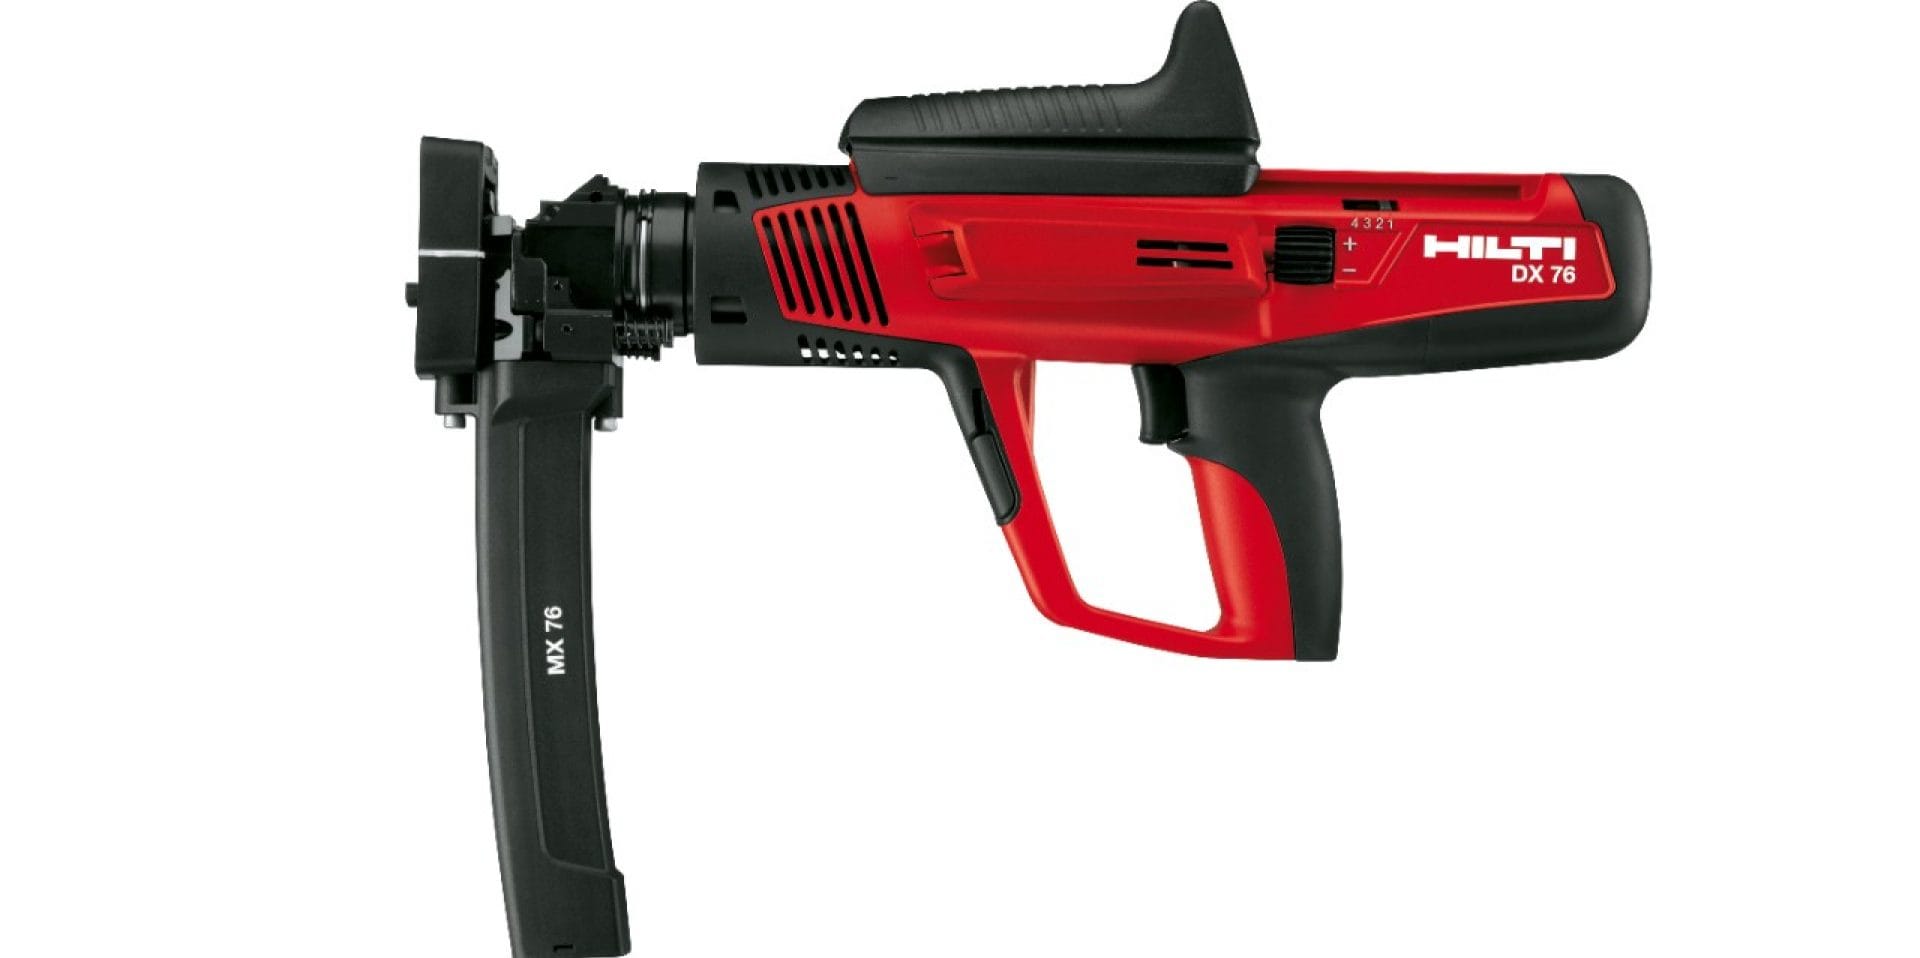 Hilti DX 76 semi-automatic powder-actuated tool